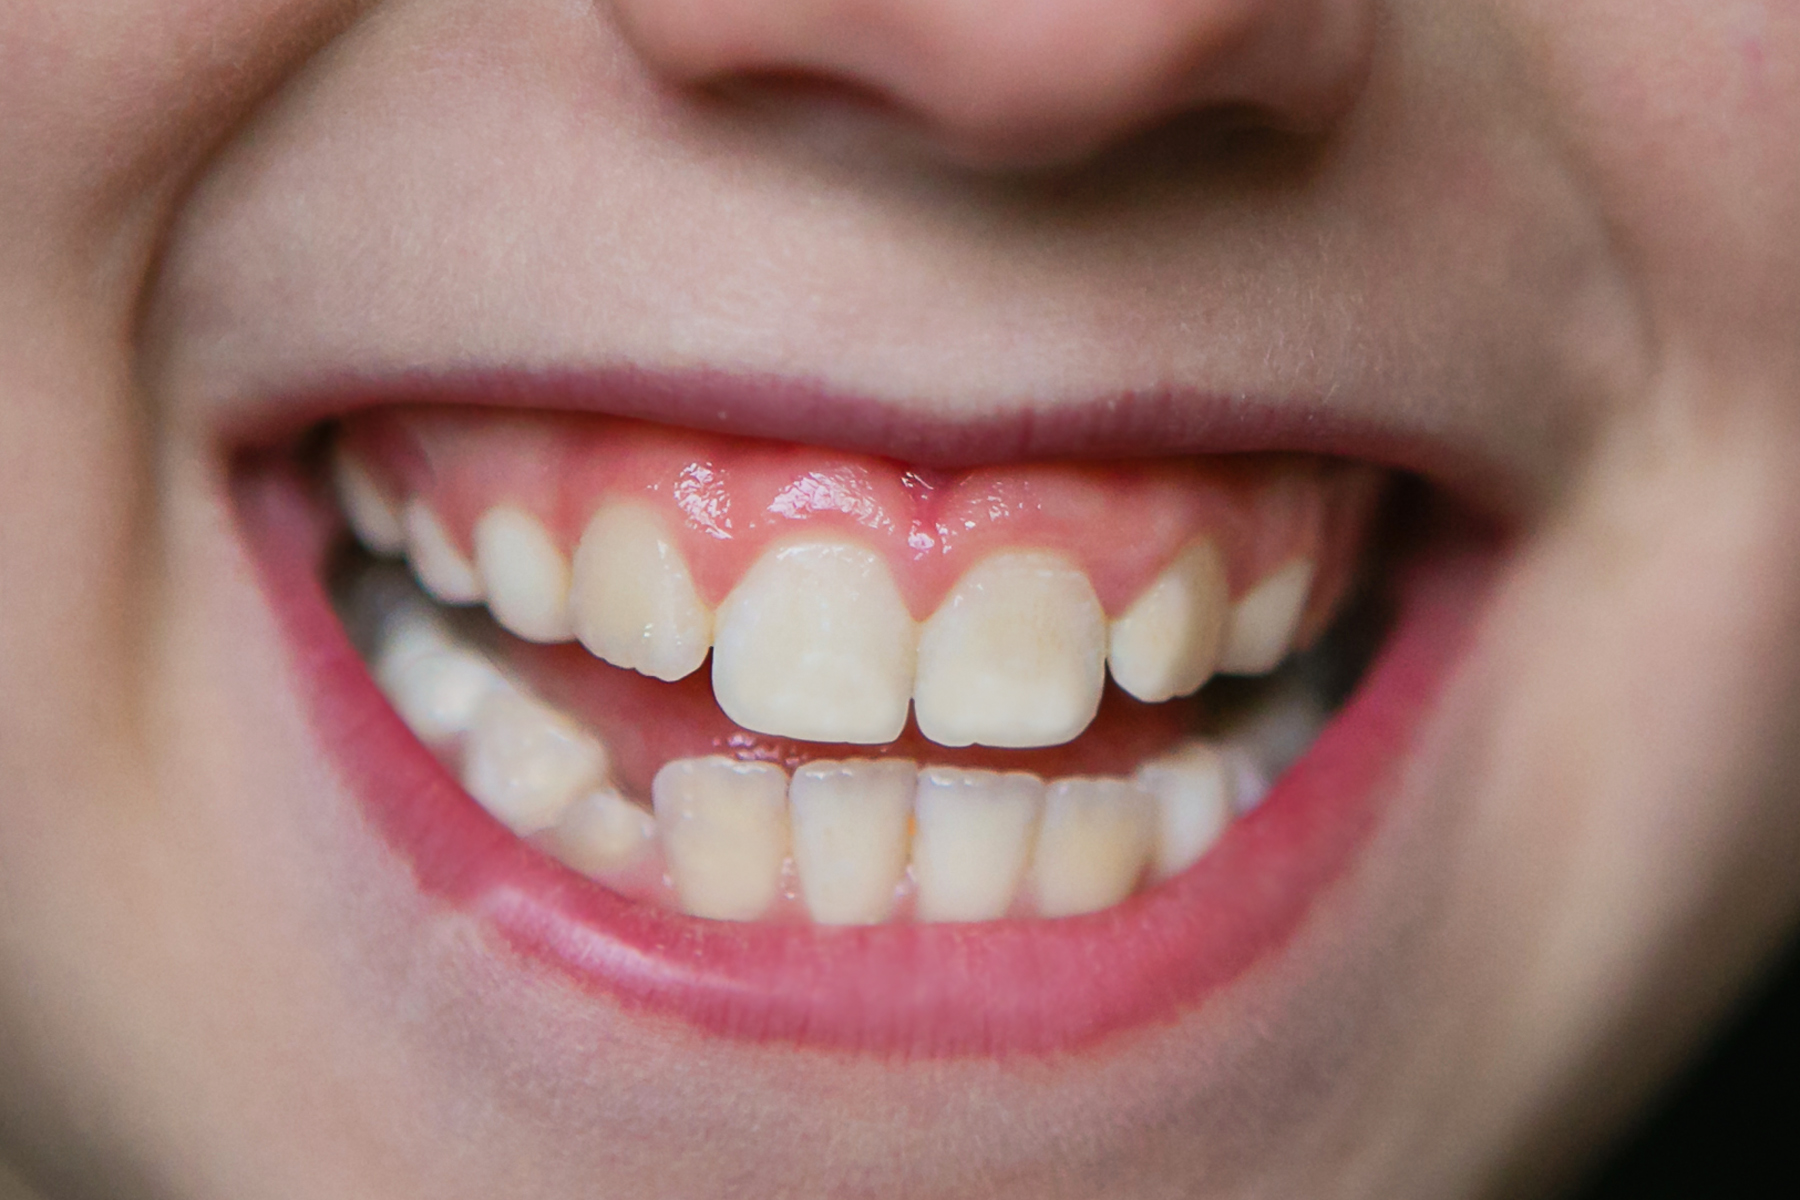 Teeth and dental care | TheSchoolRun